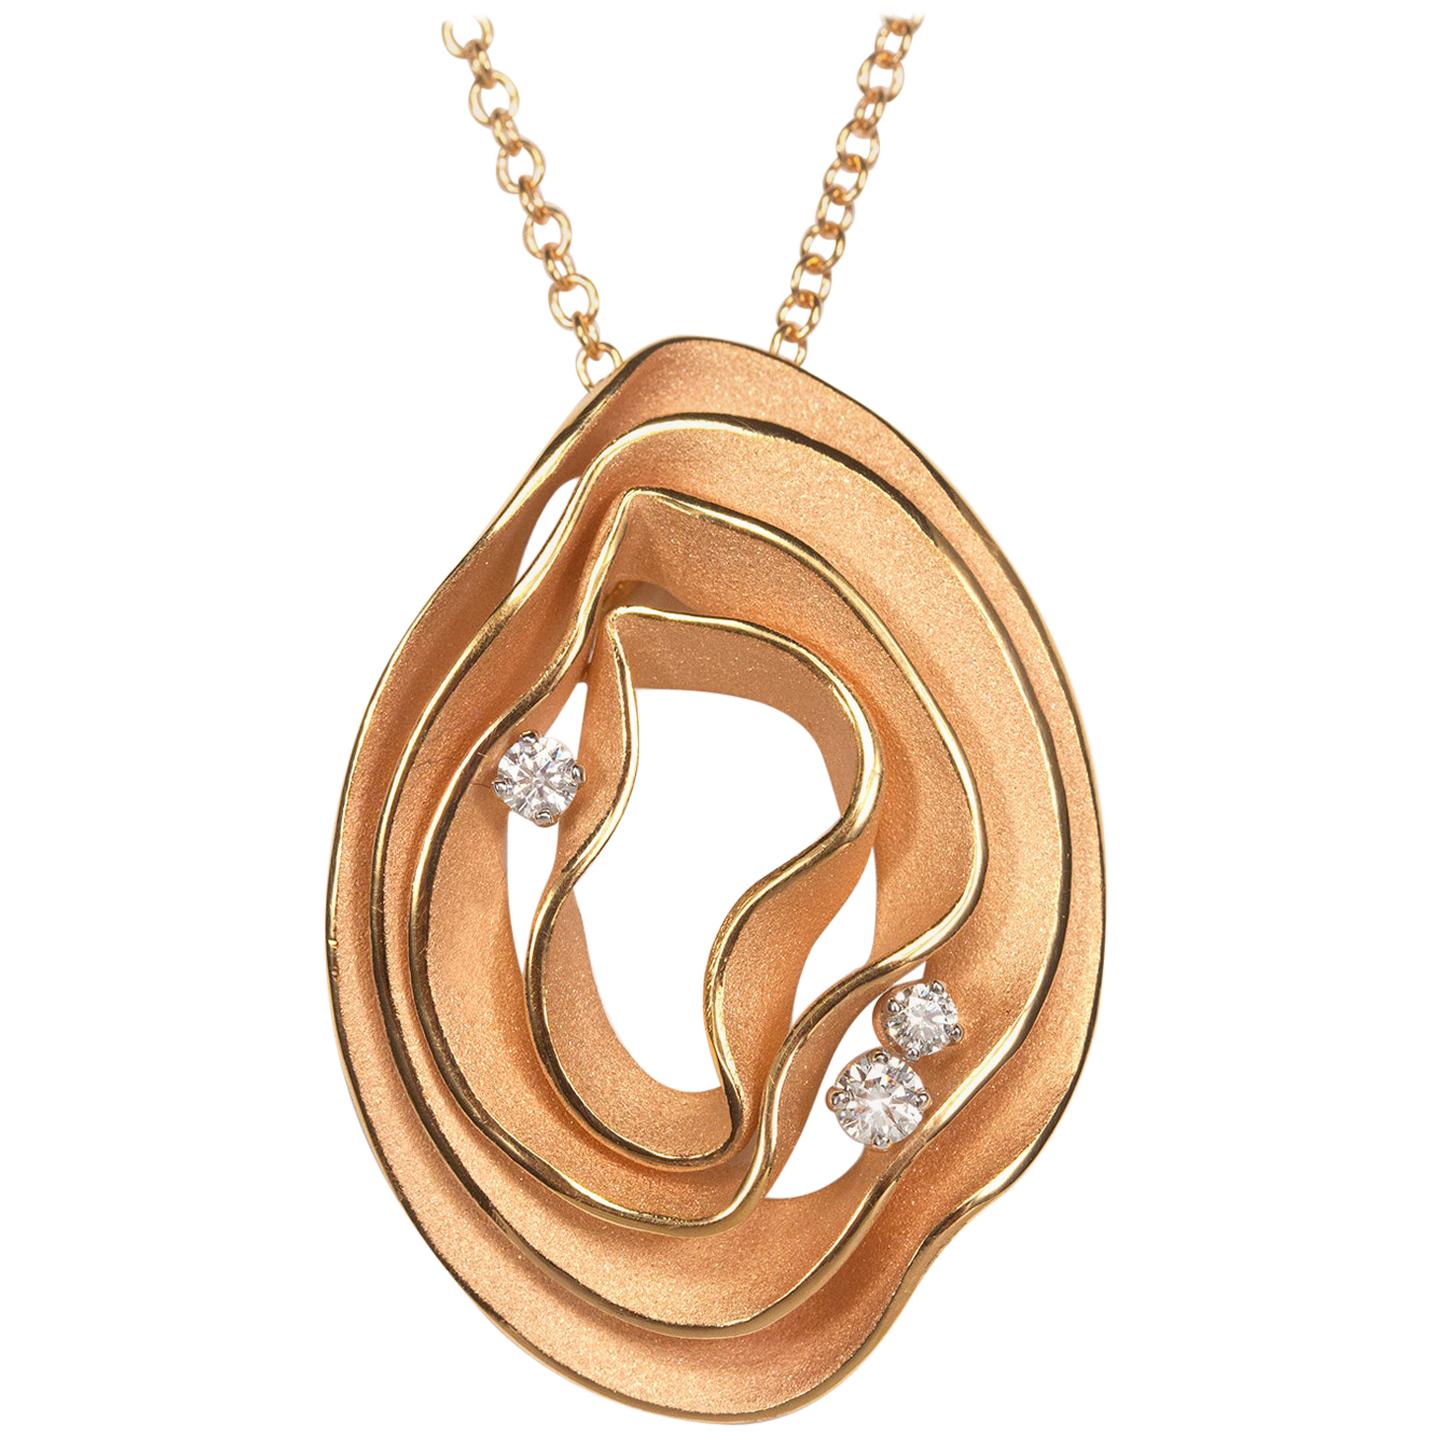 Annamaria Cammilli, collier pendentif Une avec diamants en or rose 18 carats